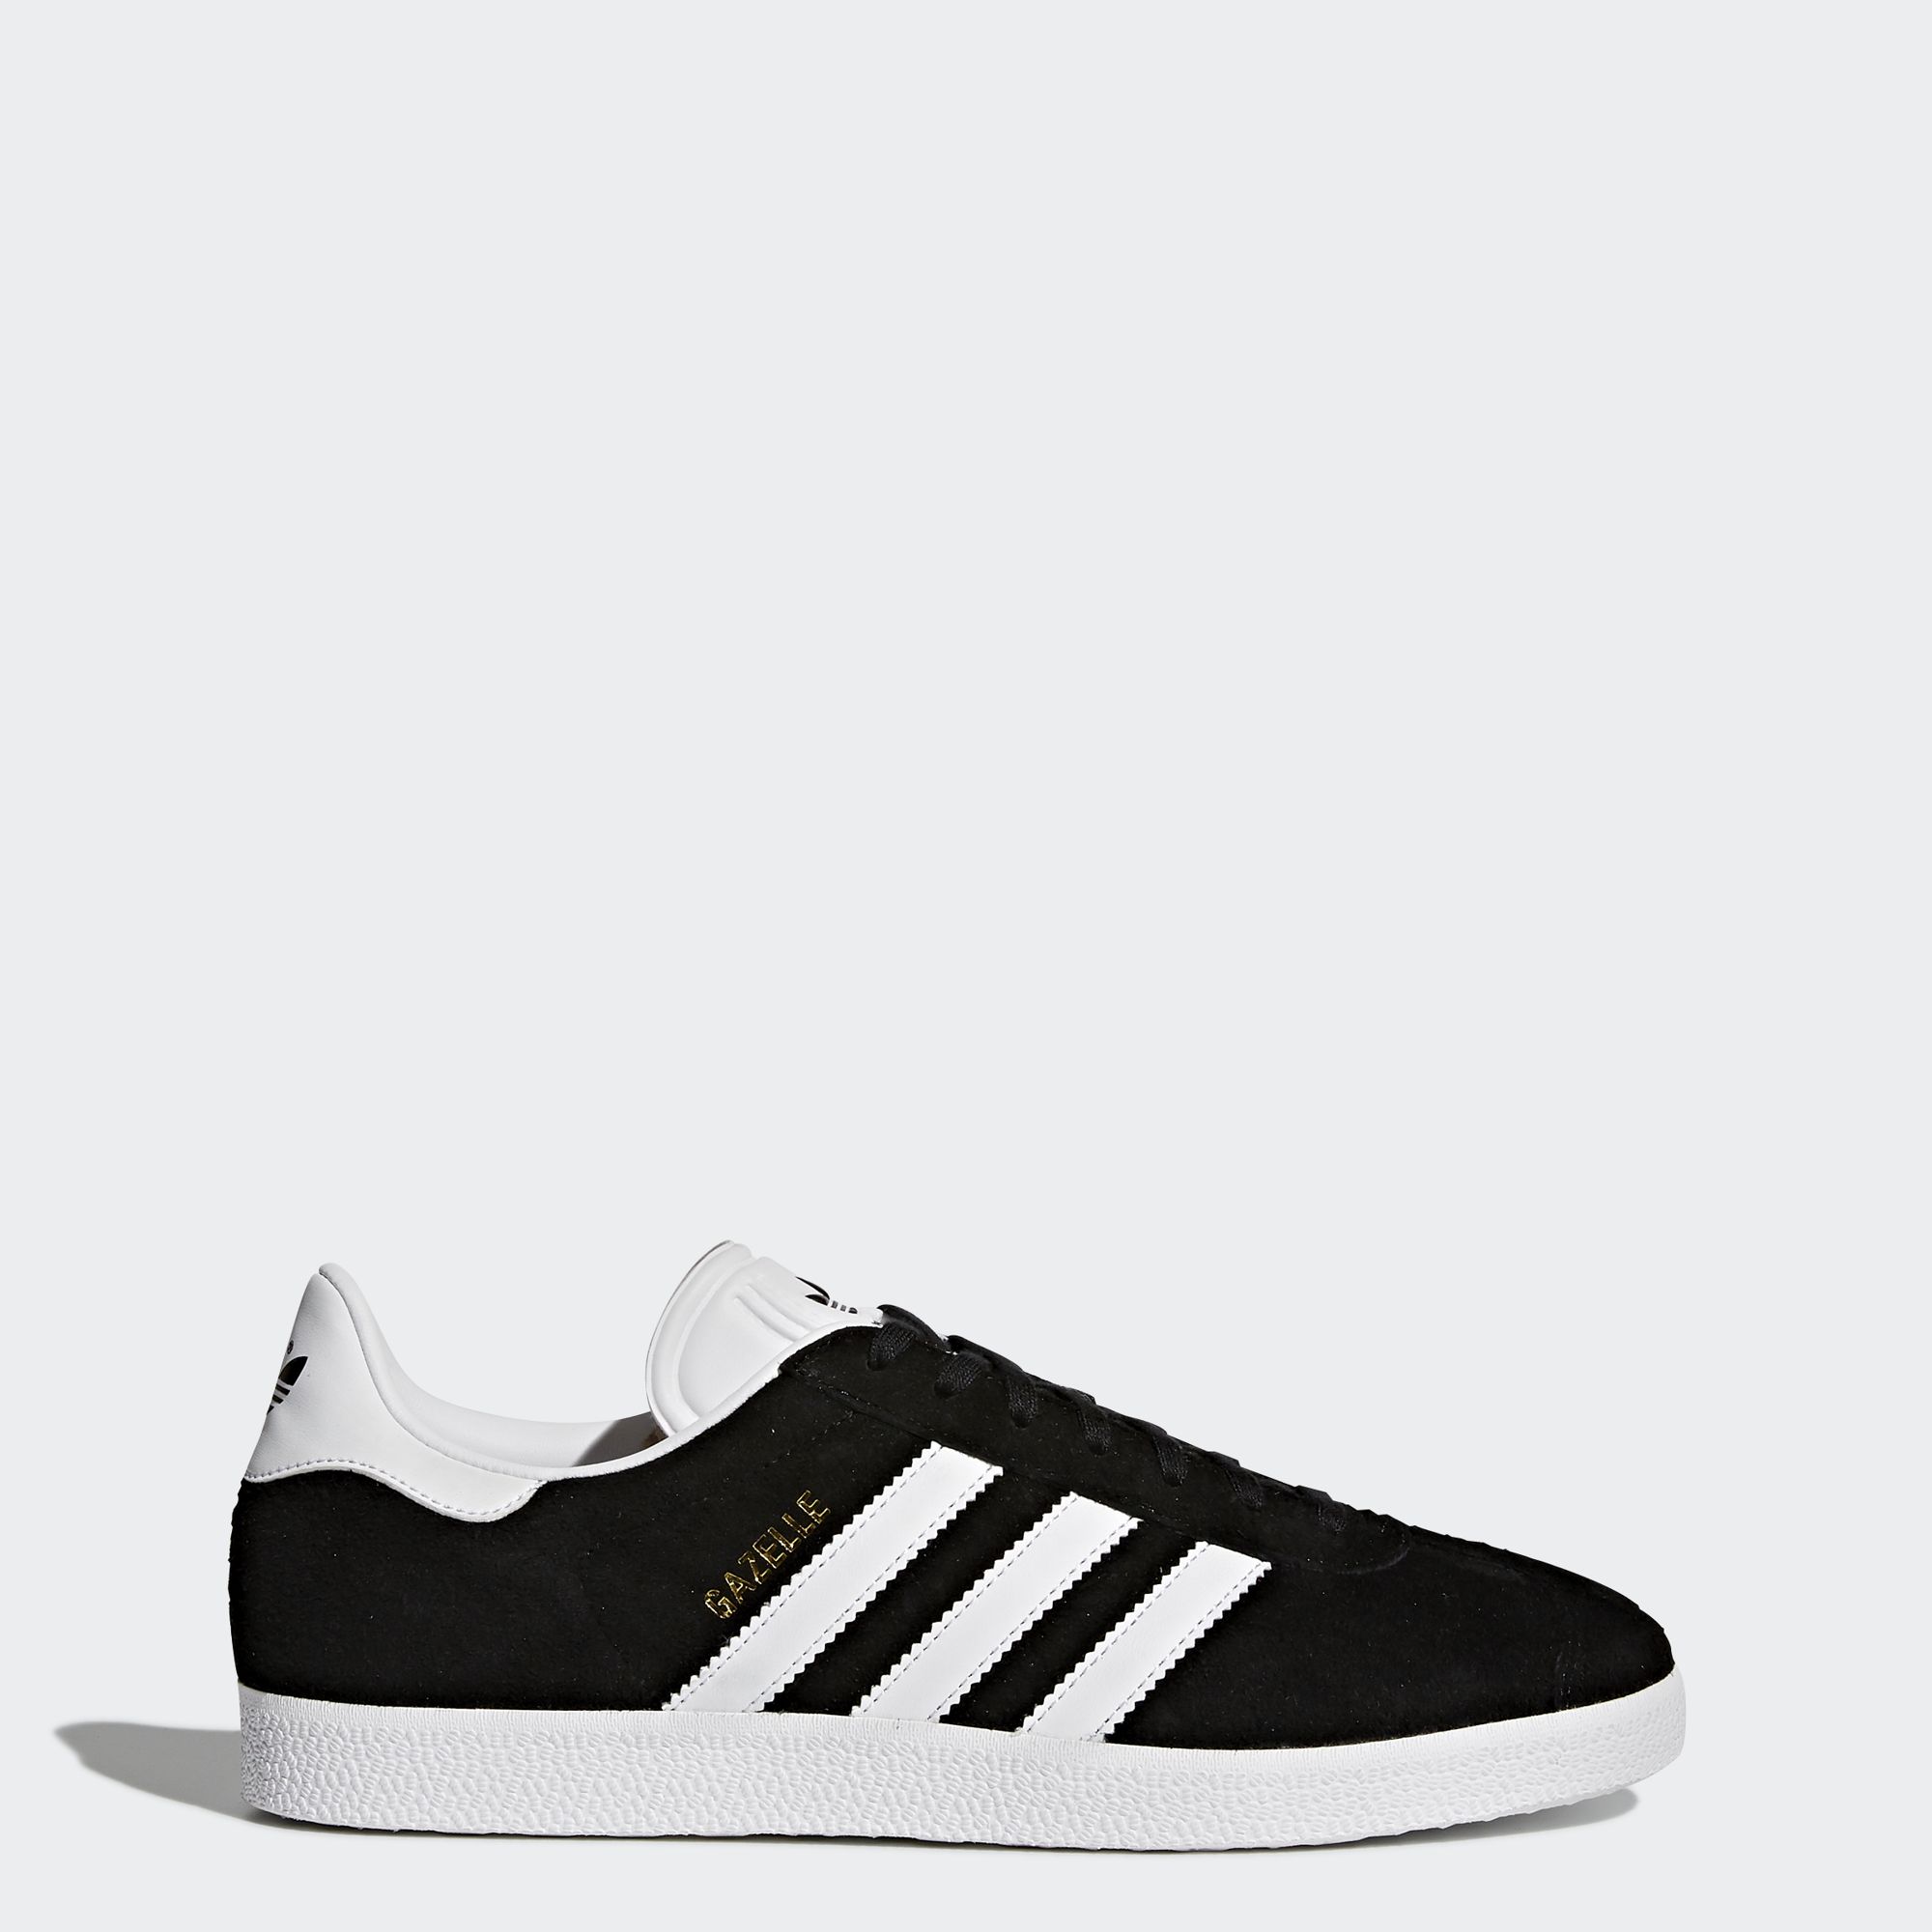 Buy Adidas Sneakers Online | lazada.sg